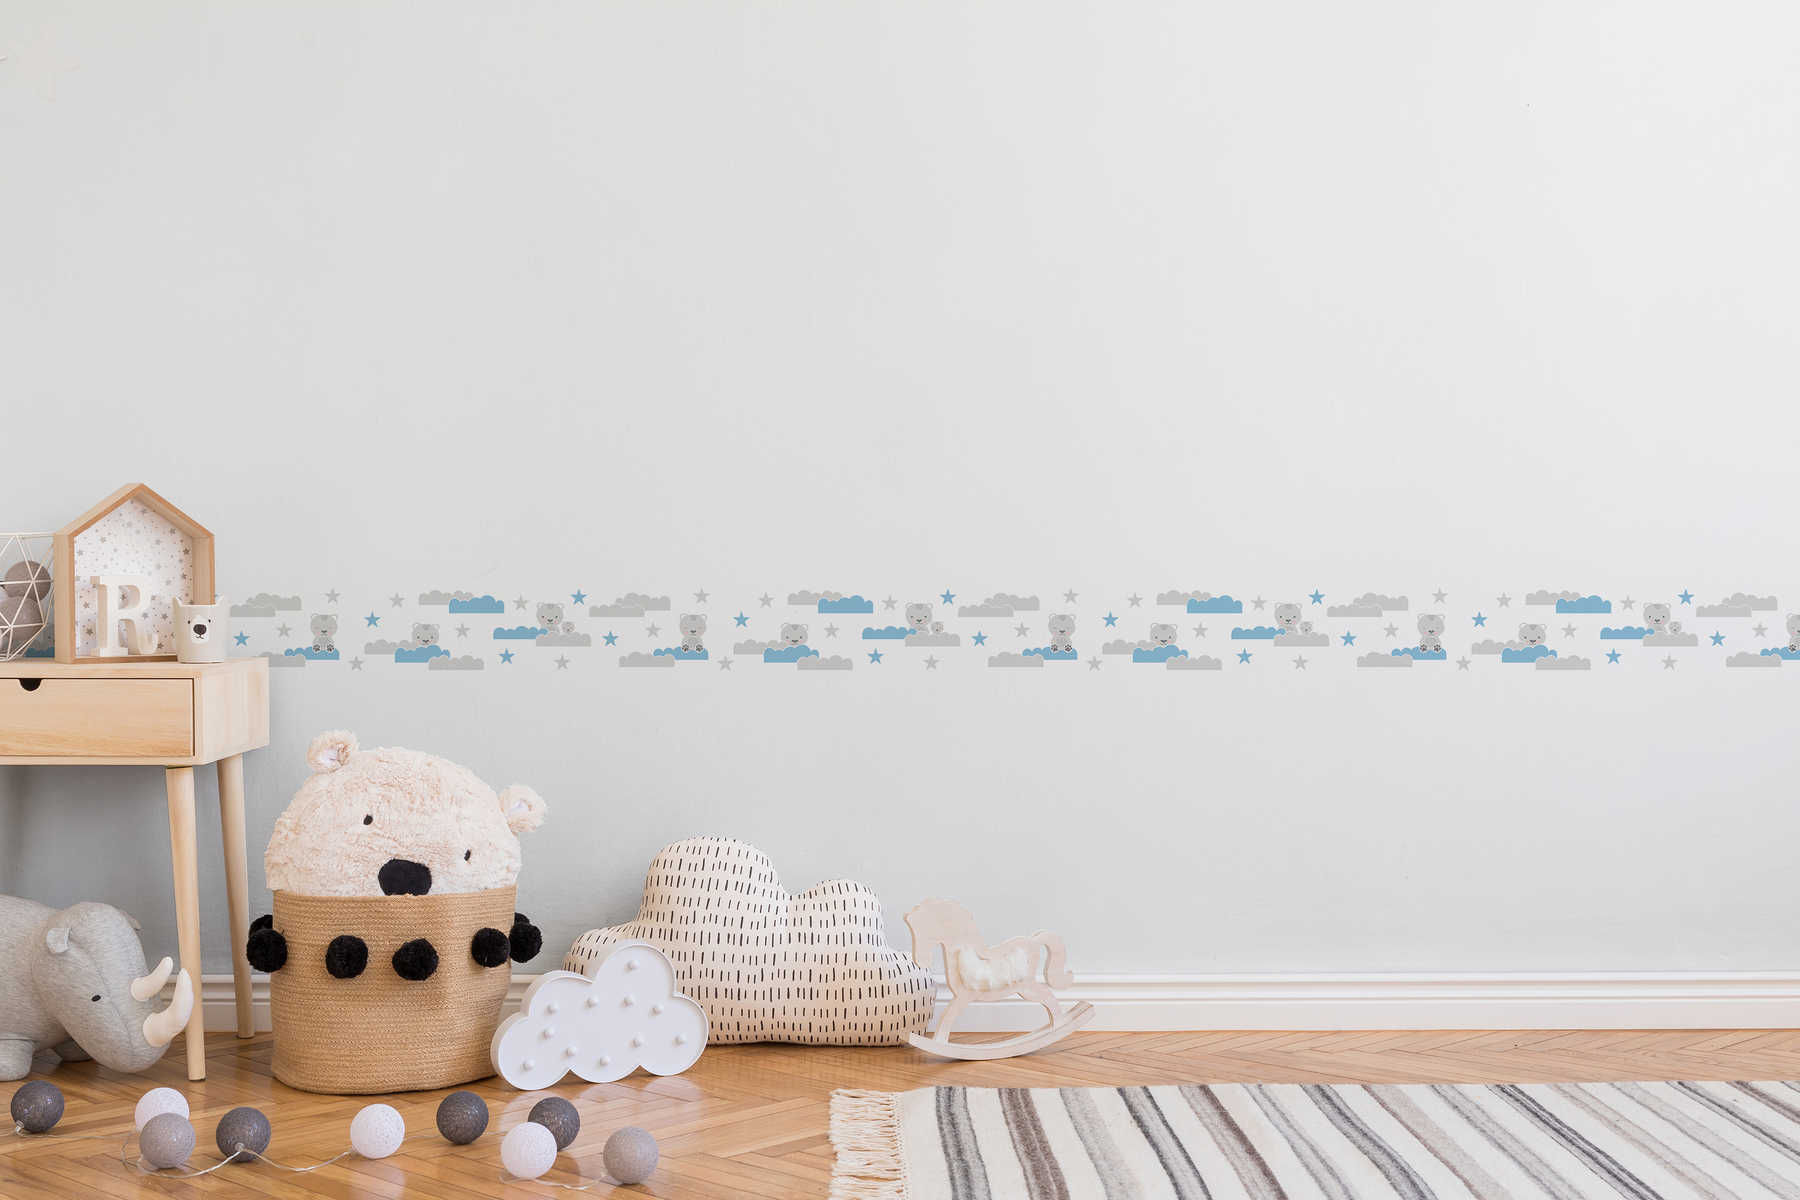             Bordura autoadhesiva para habitación de bebé de niño "Cielo de oso" - Gris, Azul, Blanco
        